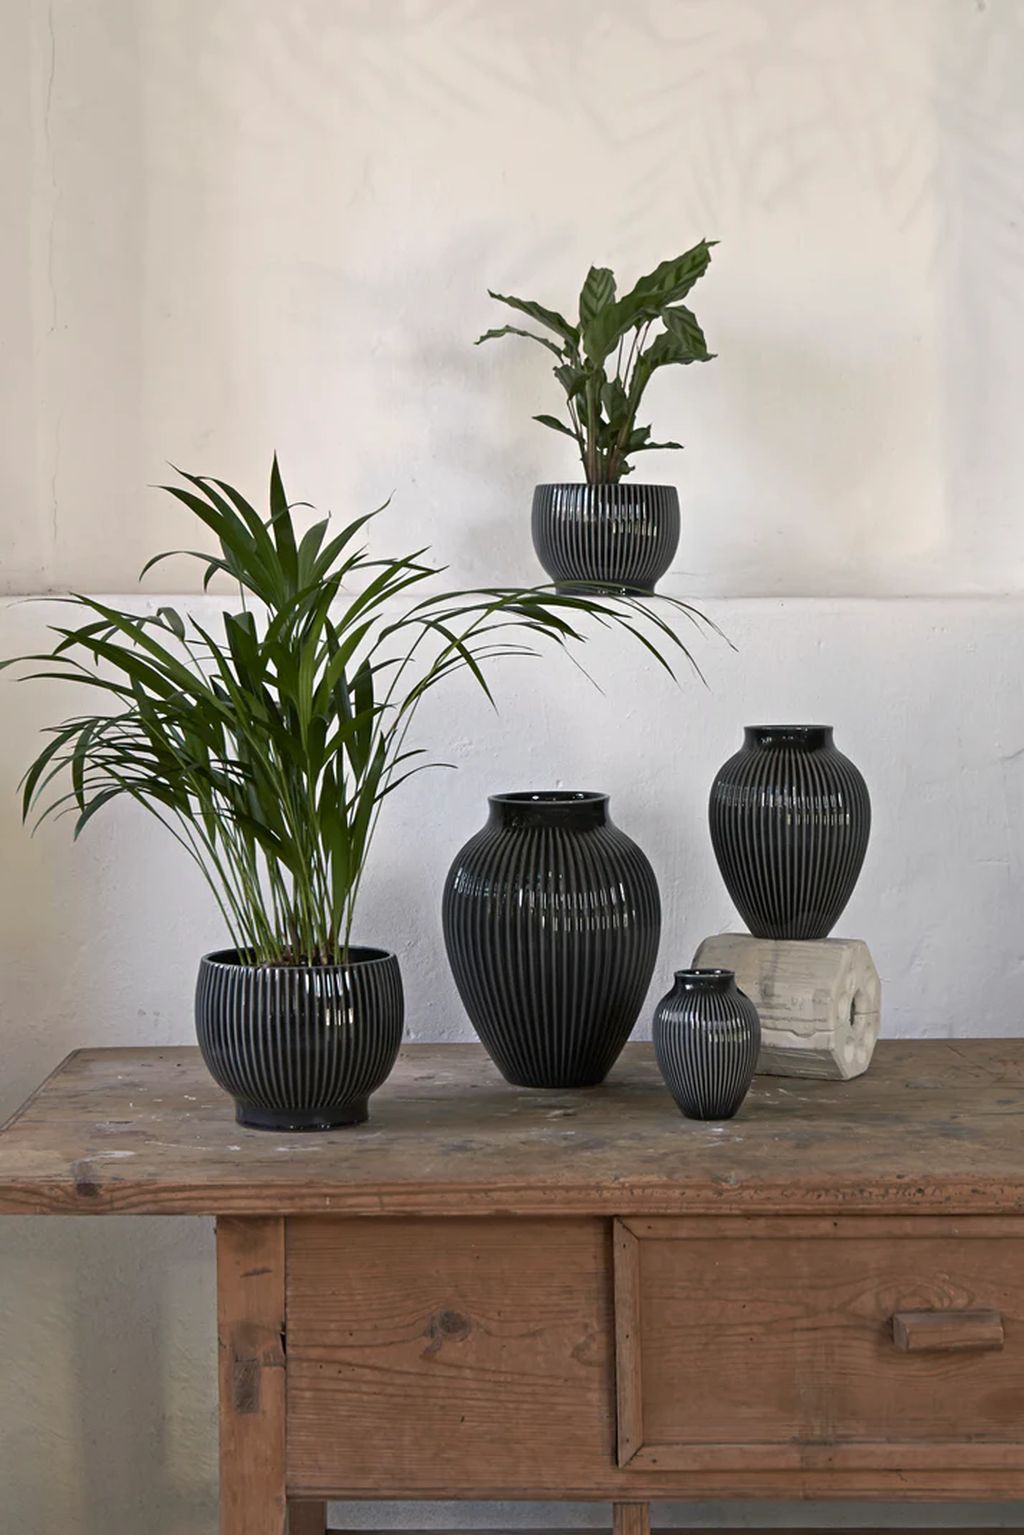 Knabstrup Keramik Flowerpot With Wheels ø 16,5 Cm, Black